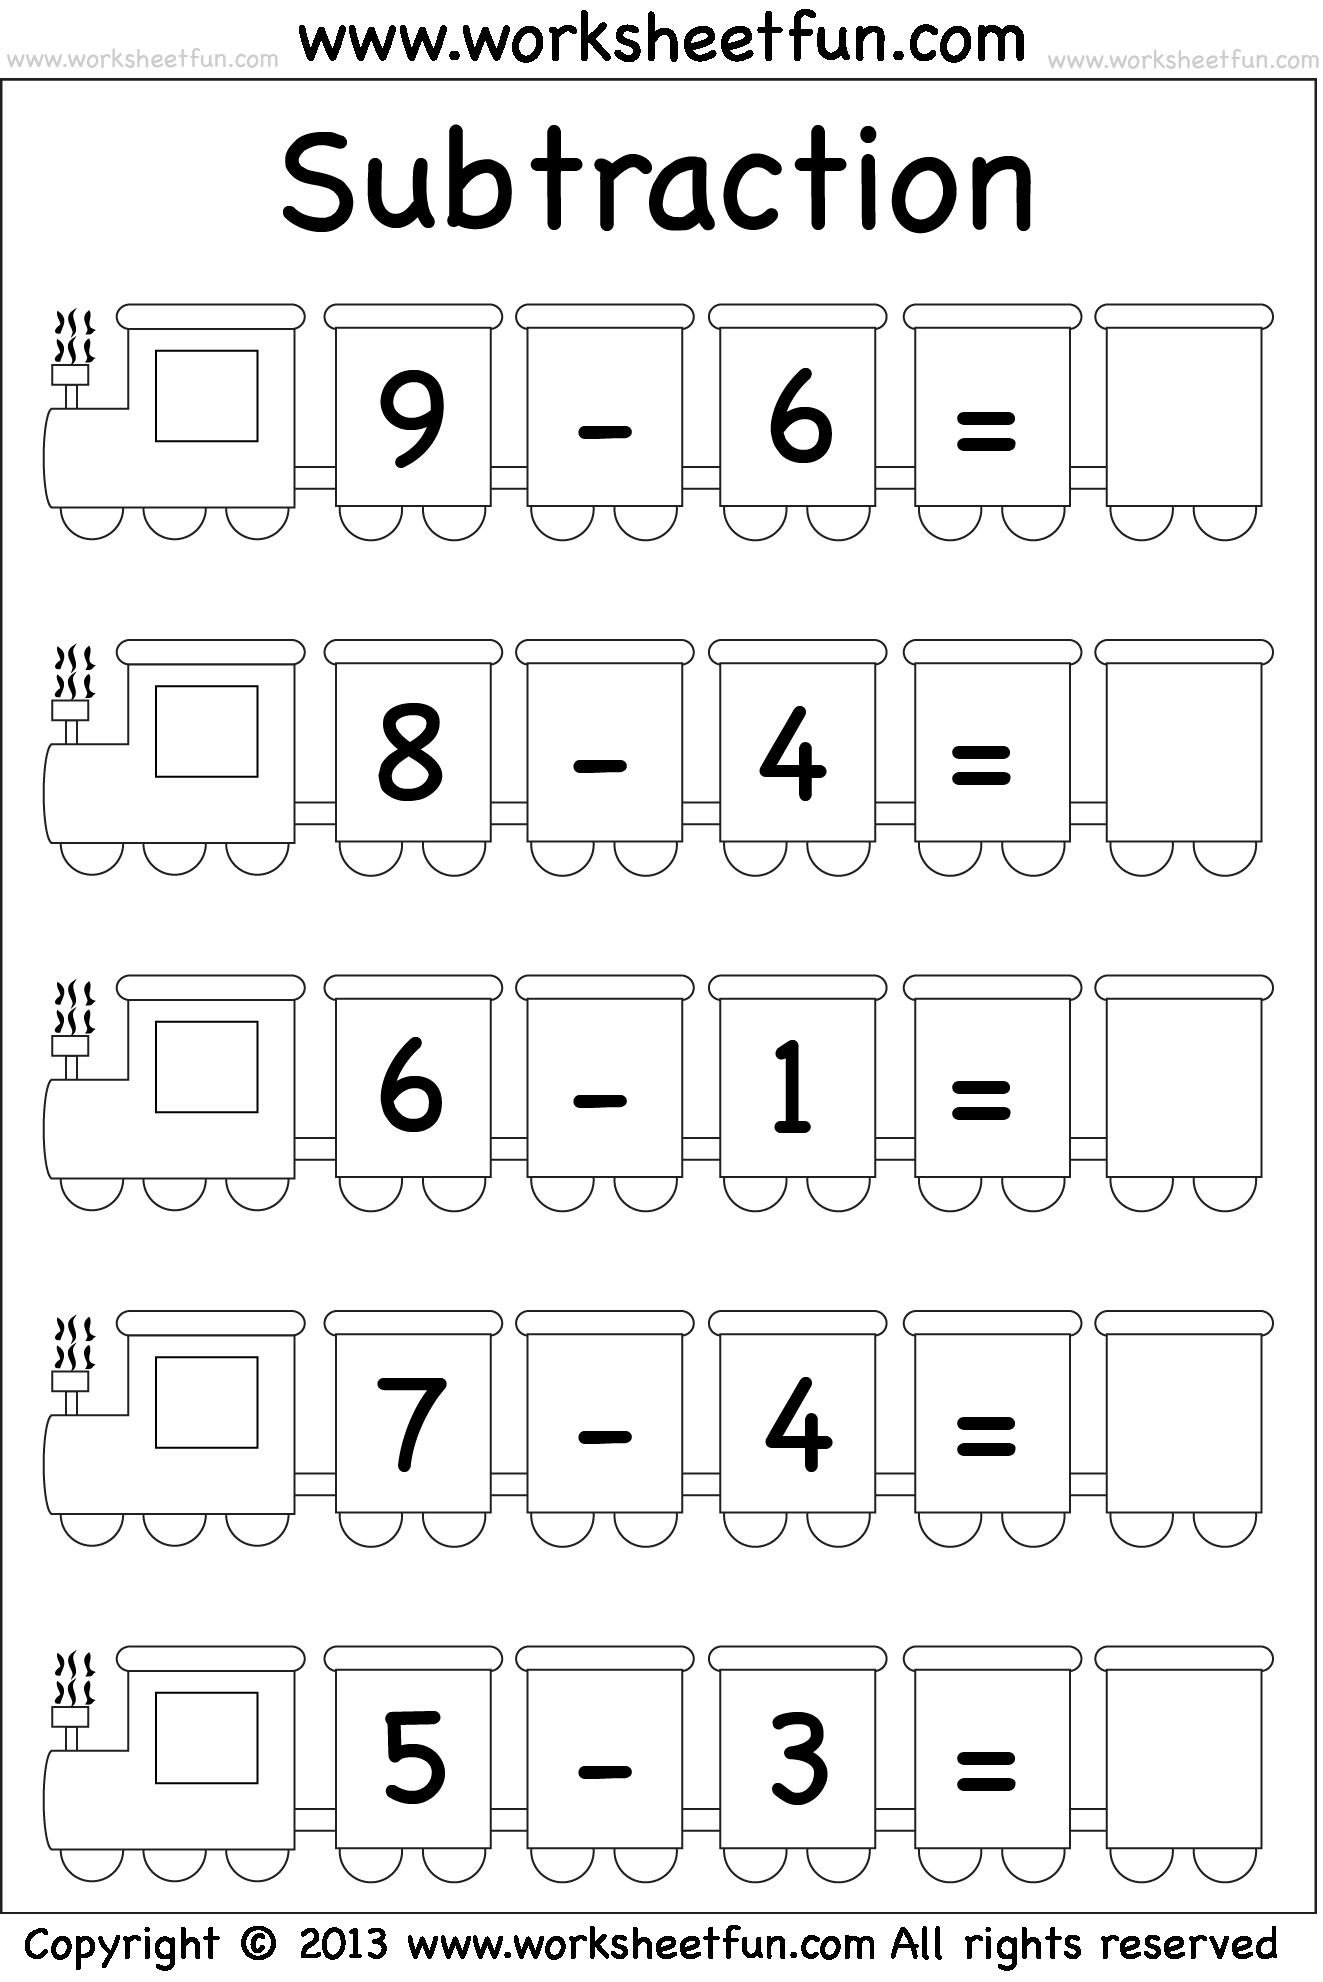 Free Math Worksheets First Grade 1 Addition Missing Addend Sum Under 20